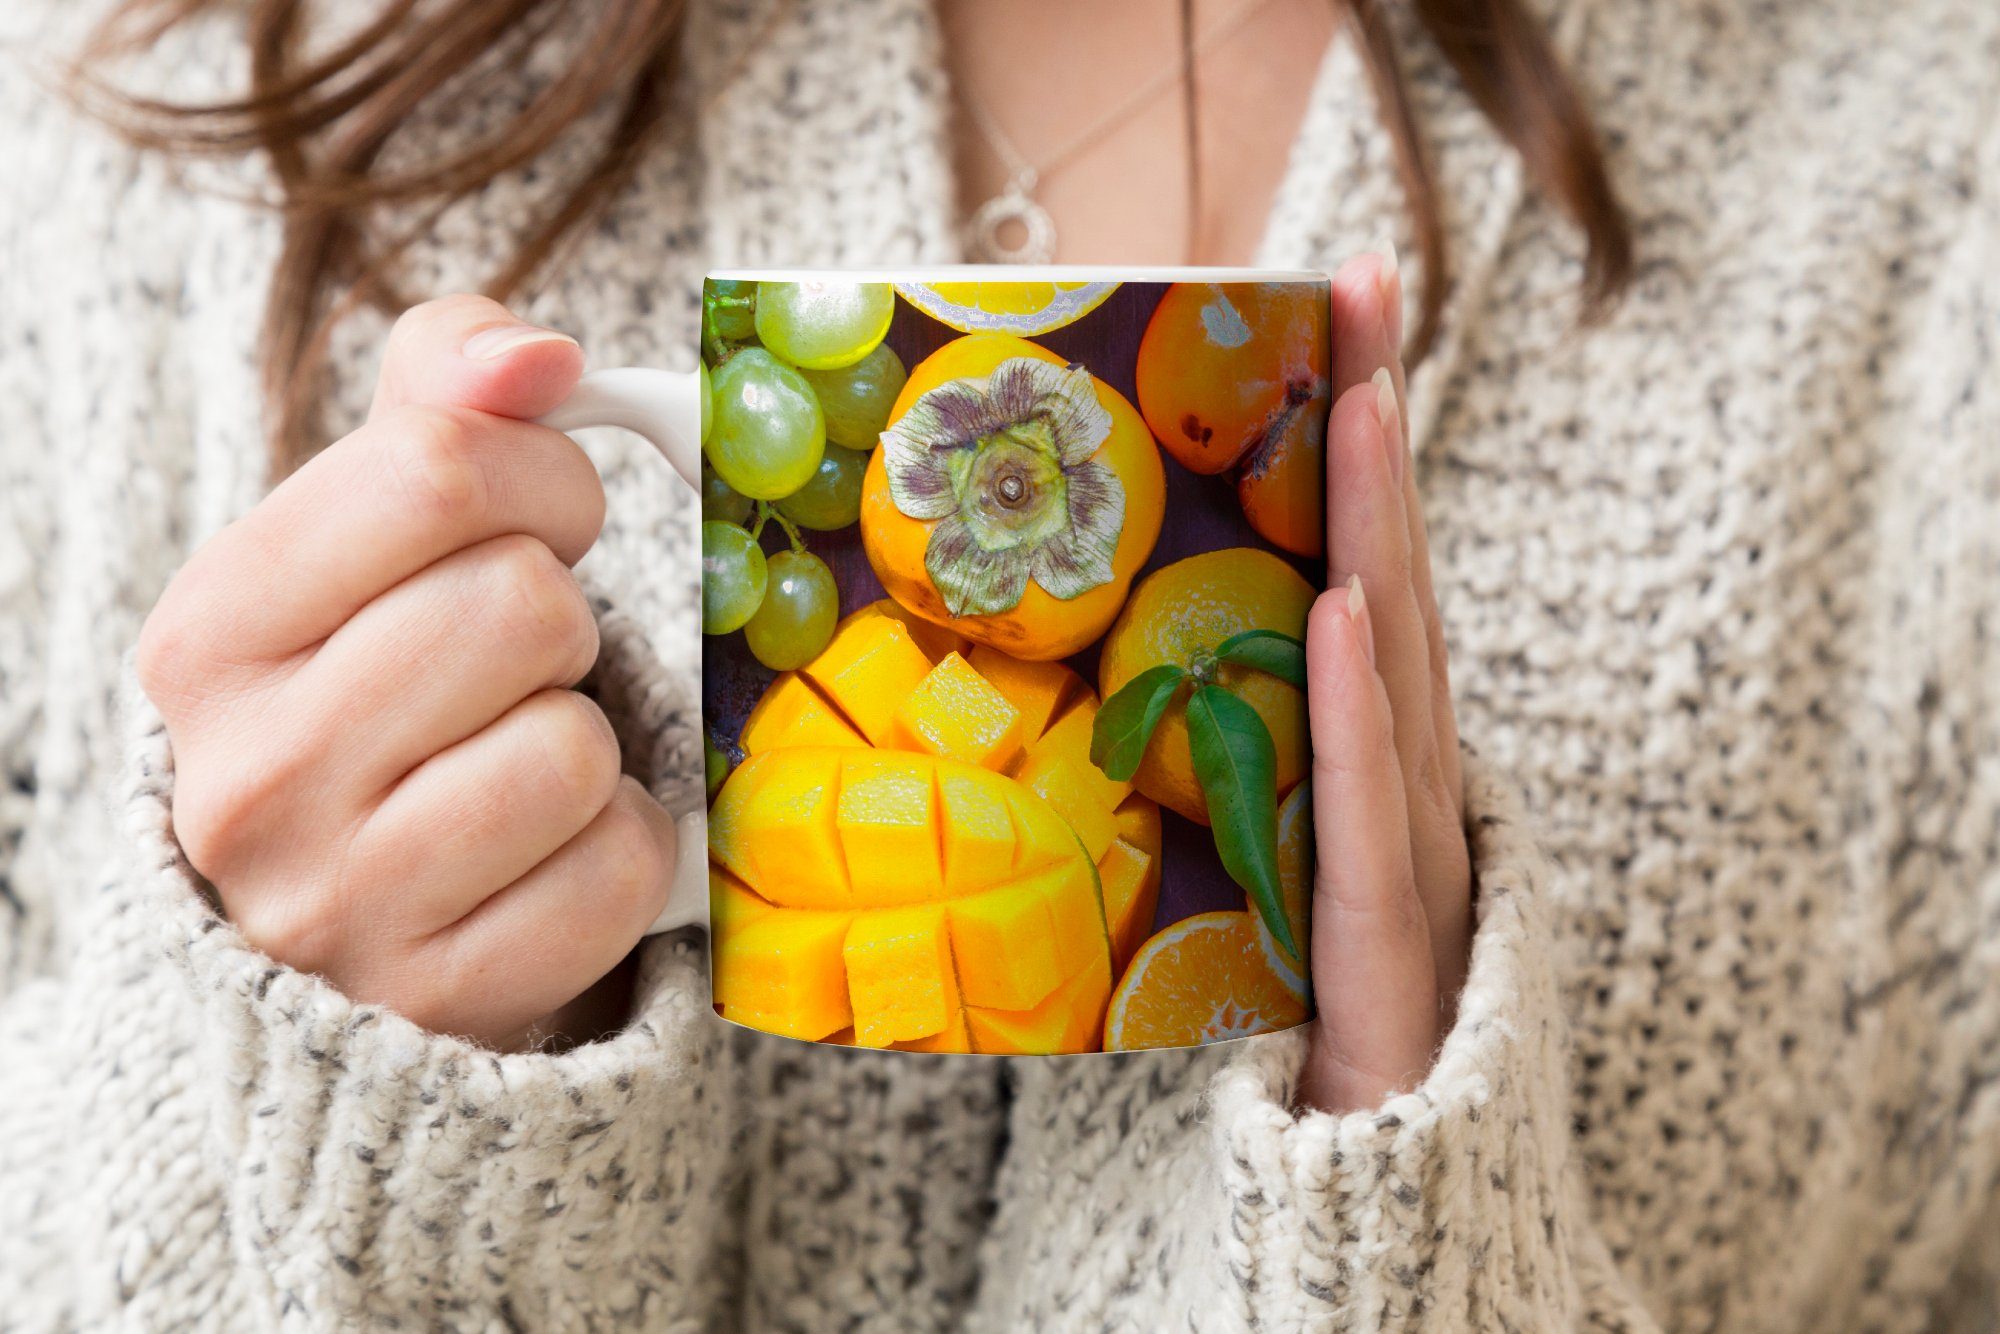 MuchoWow Tasse Obst - Geschenk Keramik, Farben, Teetasse, Teetasse, Regenbogen Becher, - Kaffeetassen